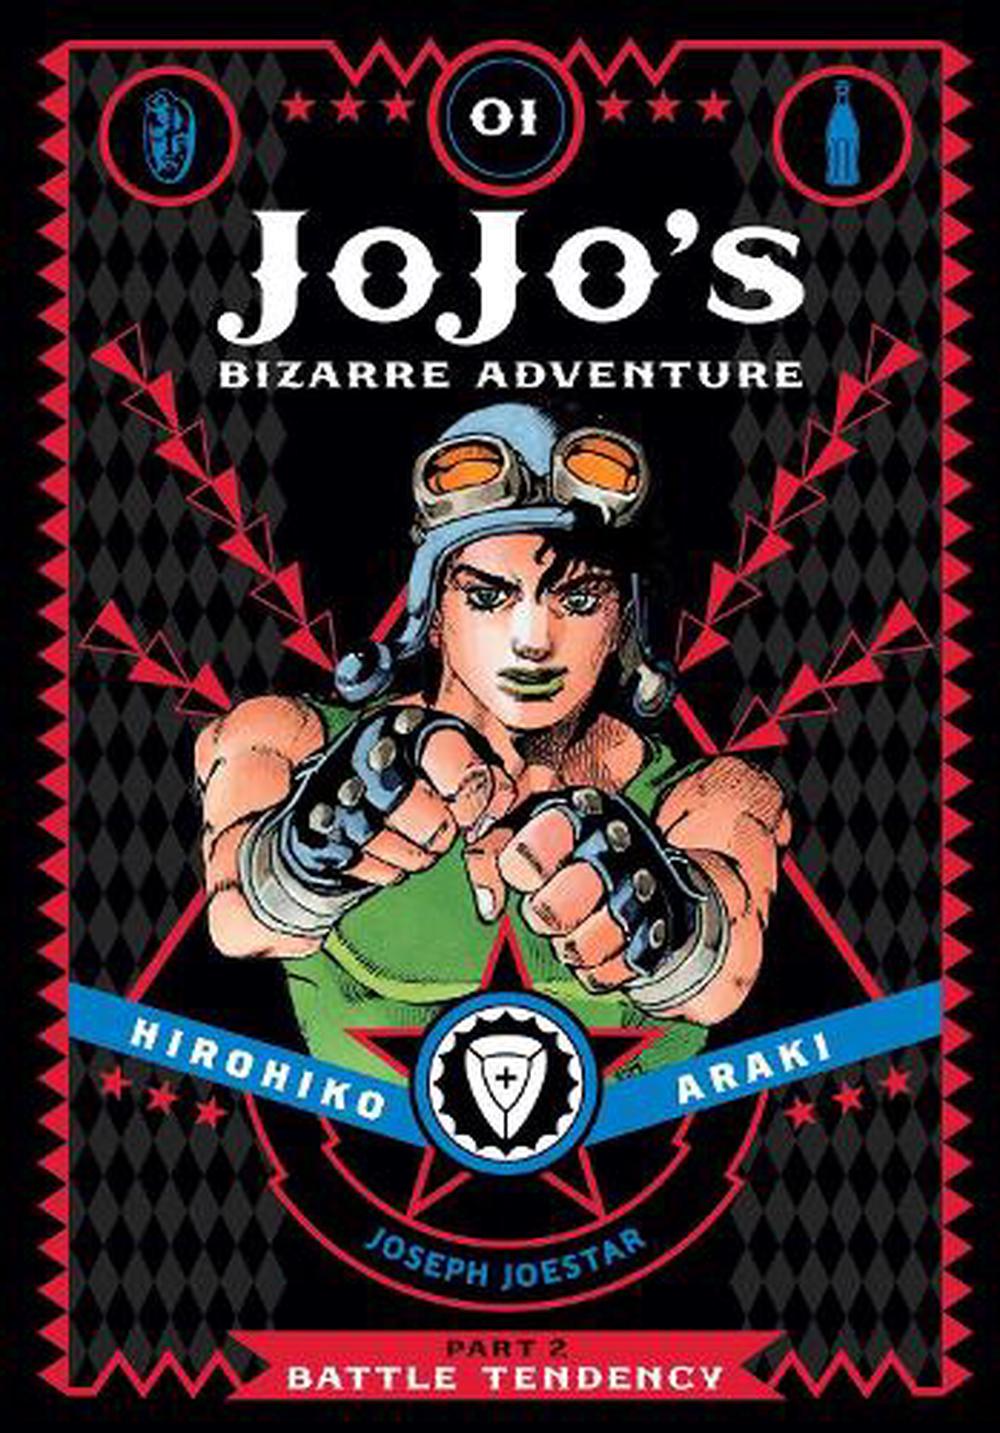 Jojo S Bizarre Adventure Part 2 Battle Tendency Volume 1 By Hirohiko Araki Hardcover 9781421578828 Buy Online At The Nile